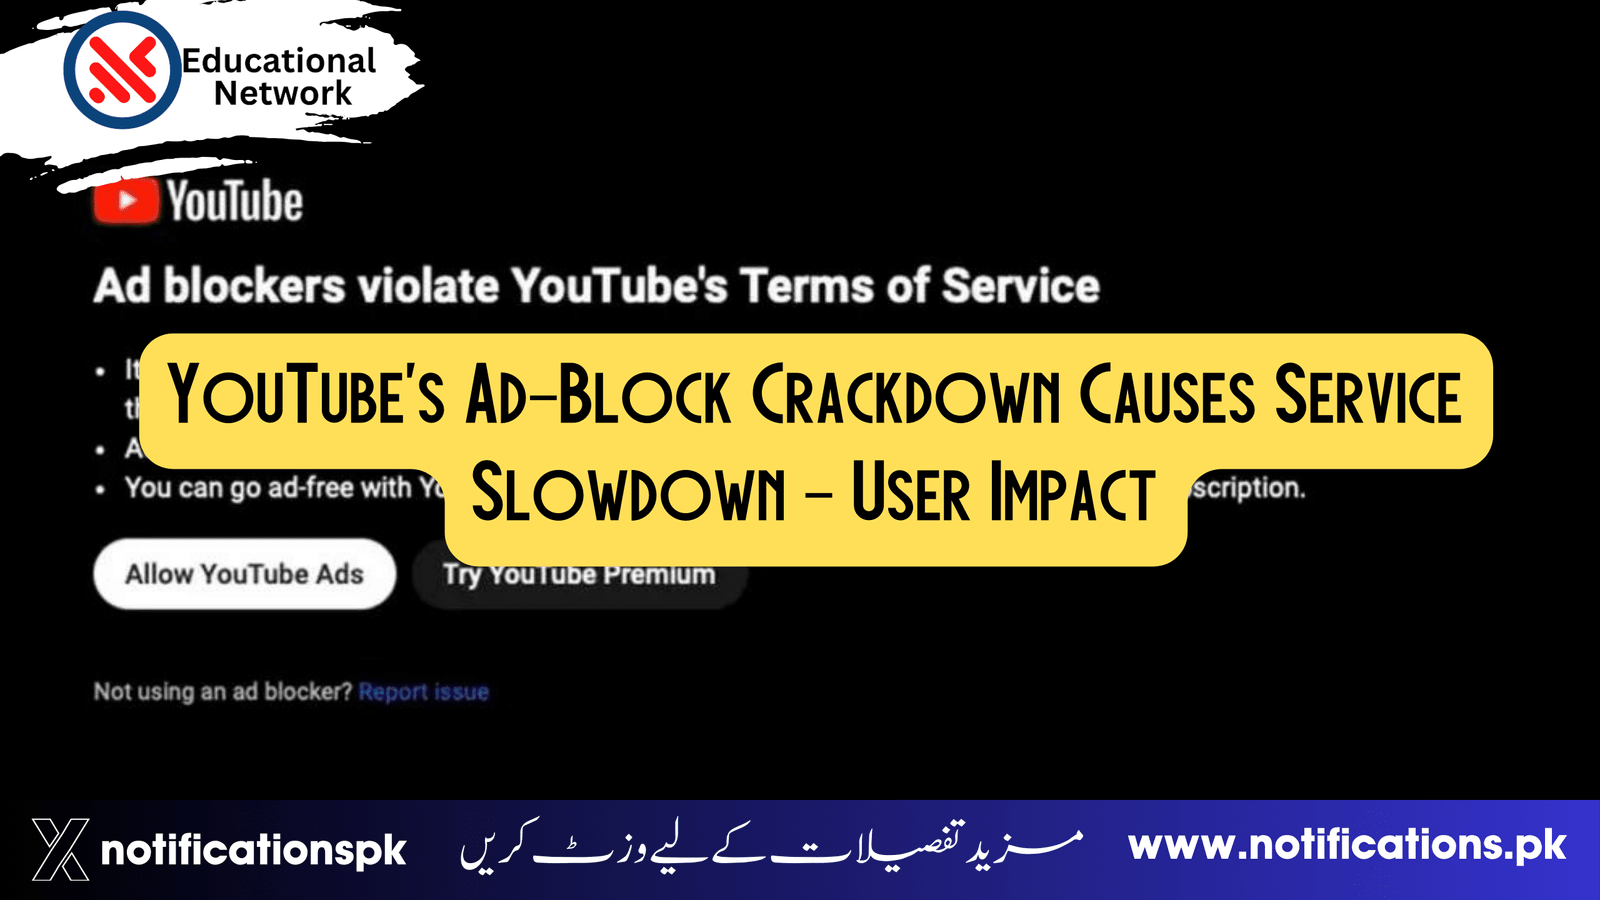 "YouTube's Ad-Block Crackdown Causes Service Slowdown – User Impact"